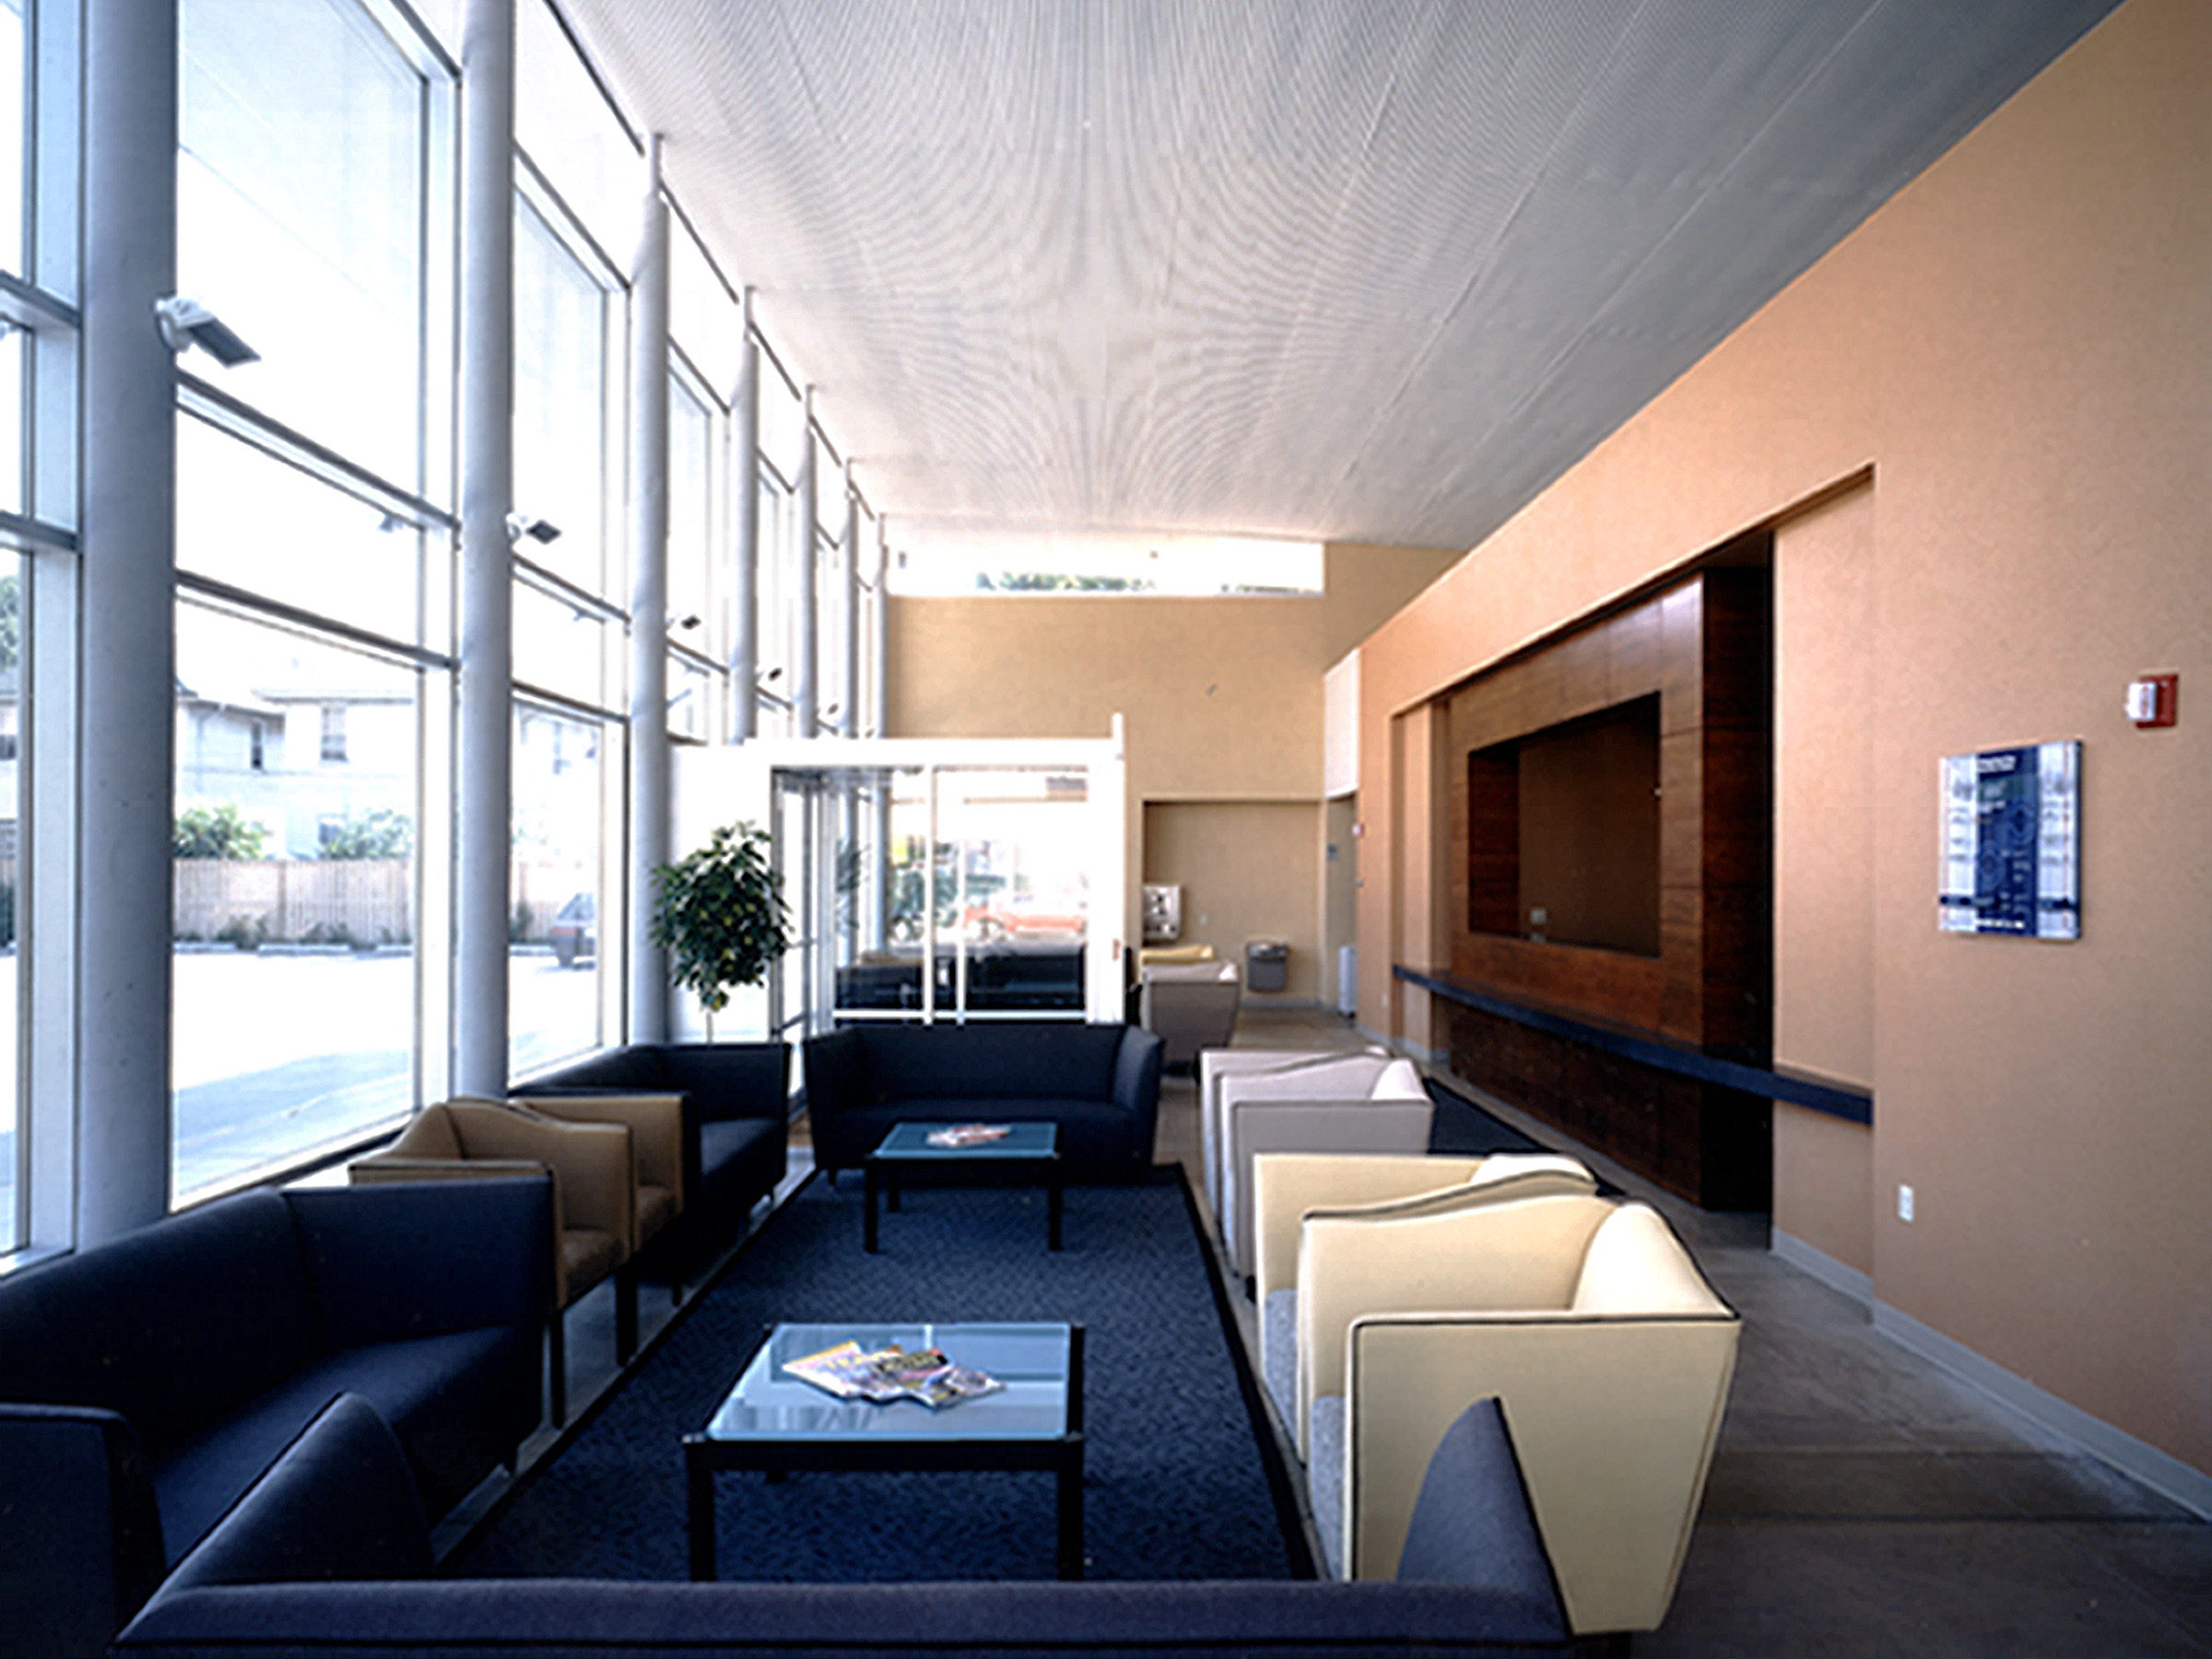 9605 - Interior View 3 - Waiting Lounge.jpg